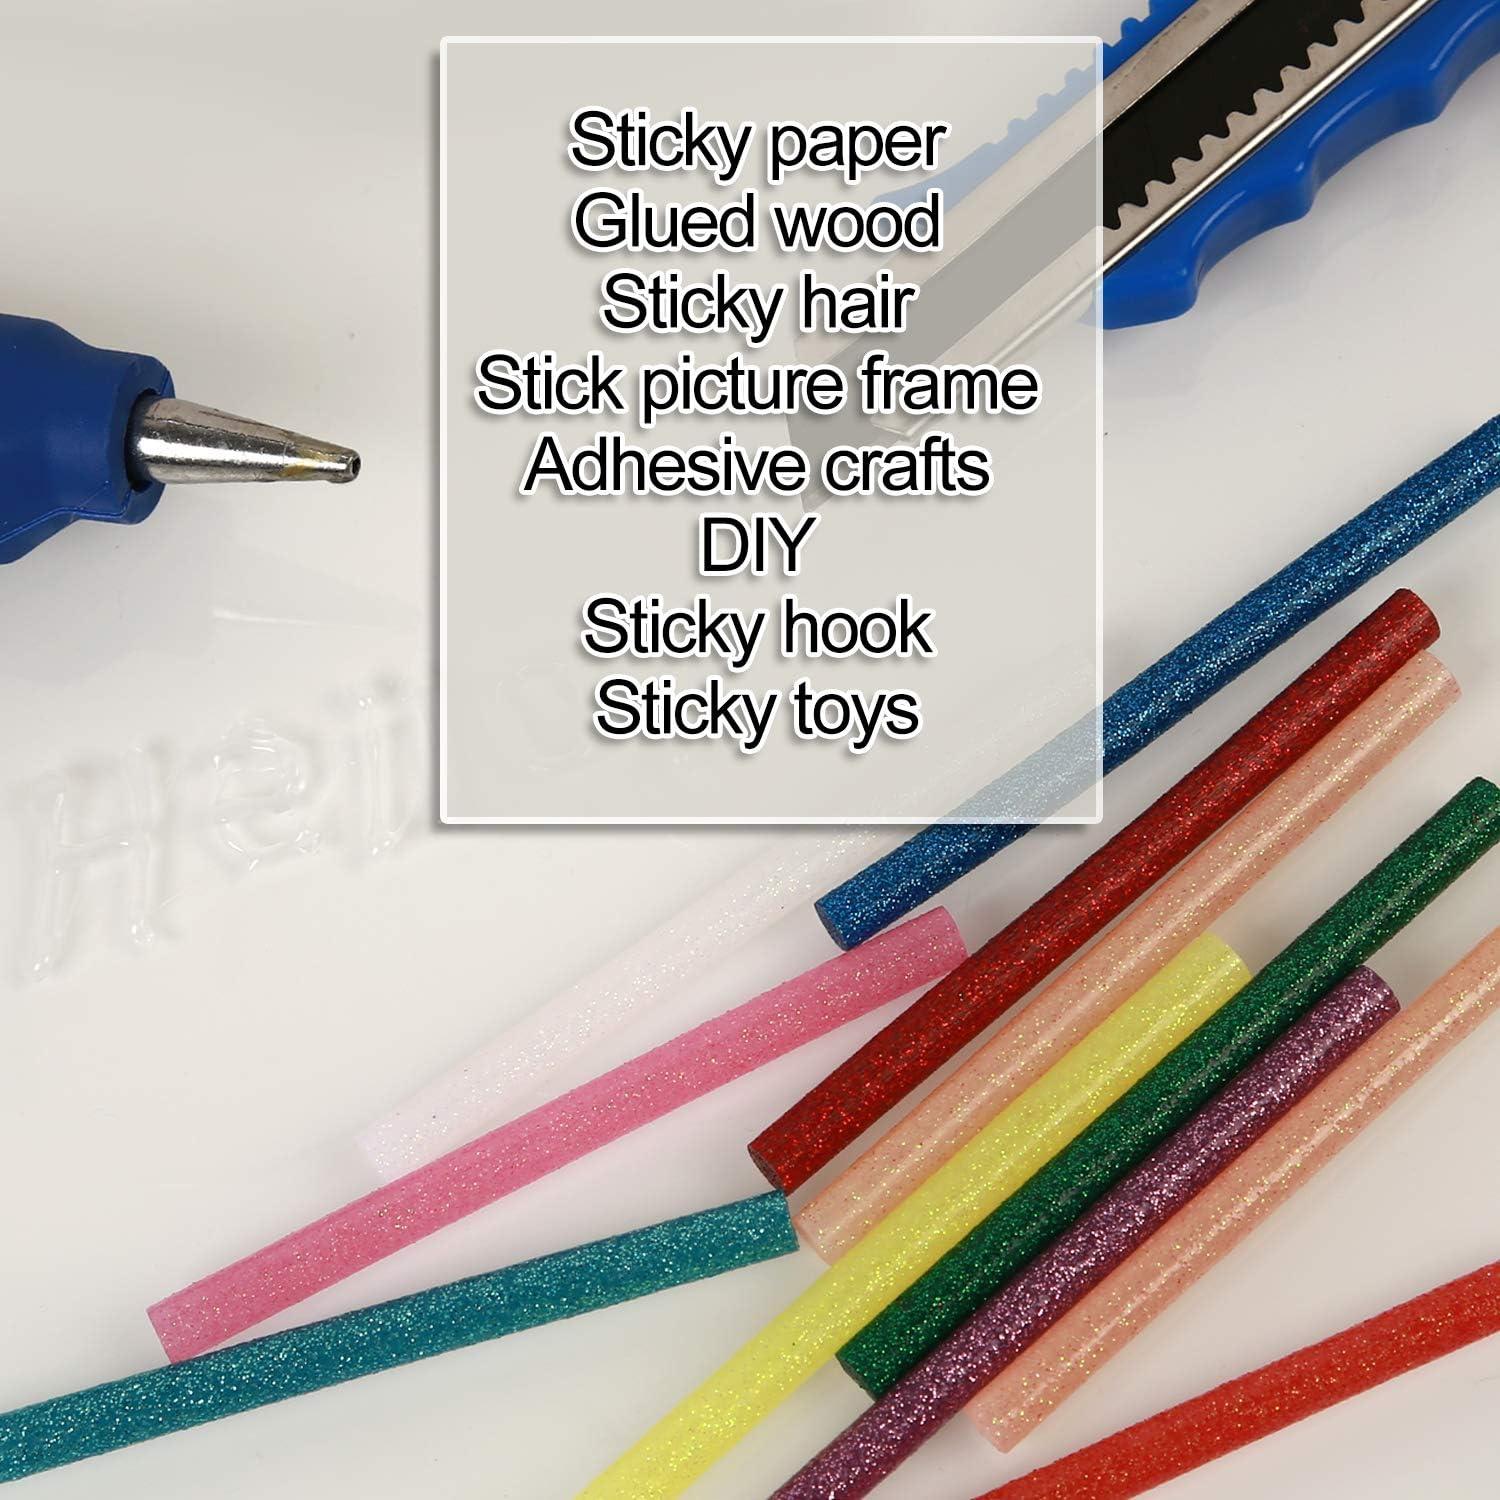 NewtonTech Mini Glitter Colorful Hot Glue Gun Sticks 150PCS,15 Colors for DIY Art Craft, Wood Glass Card Fabric Plastic School DIY Sealing Projects